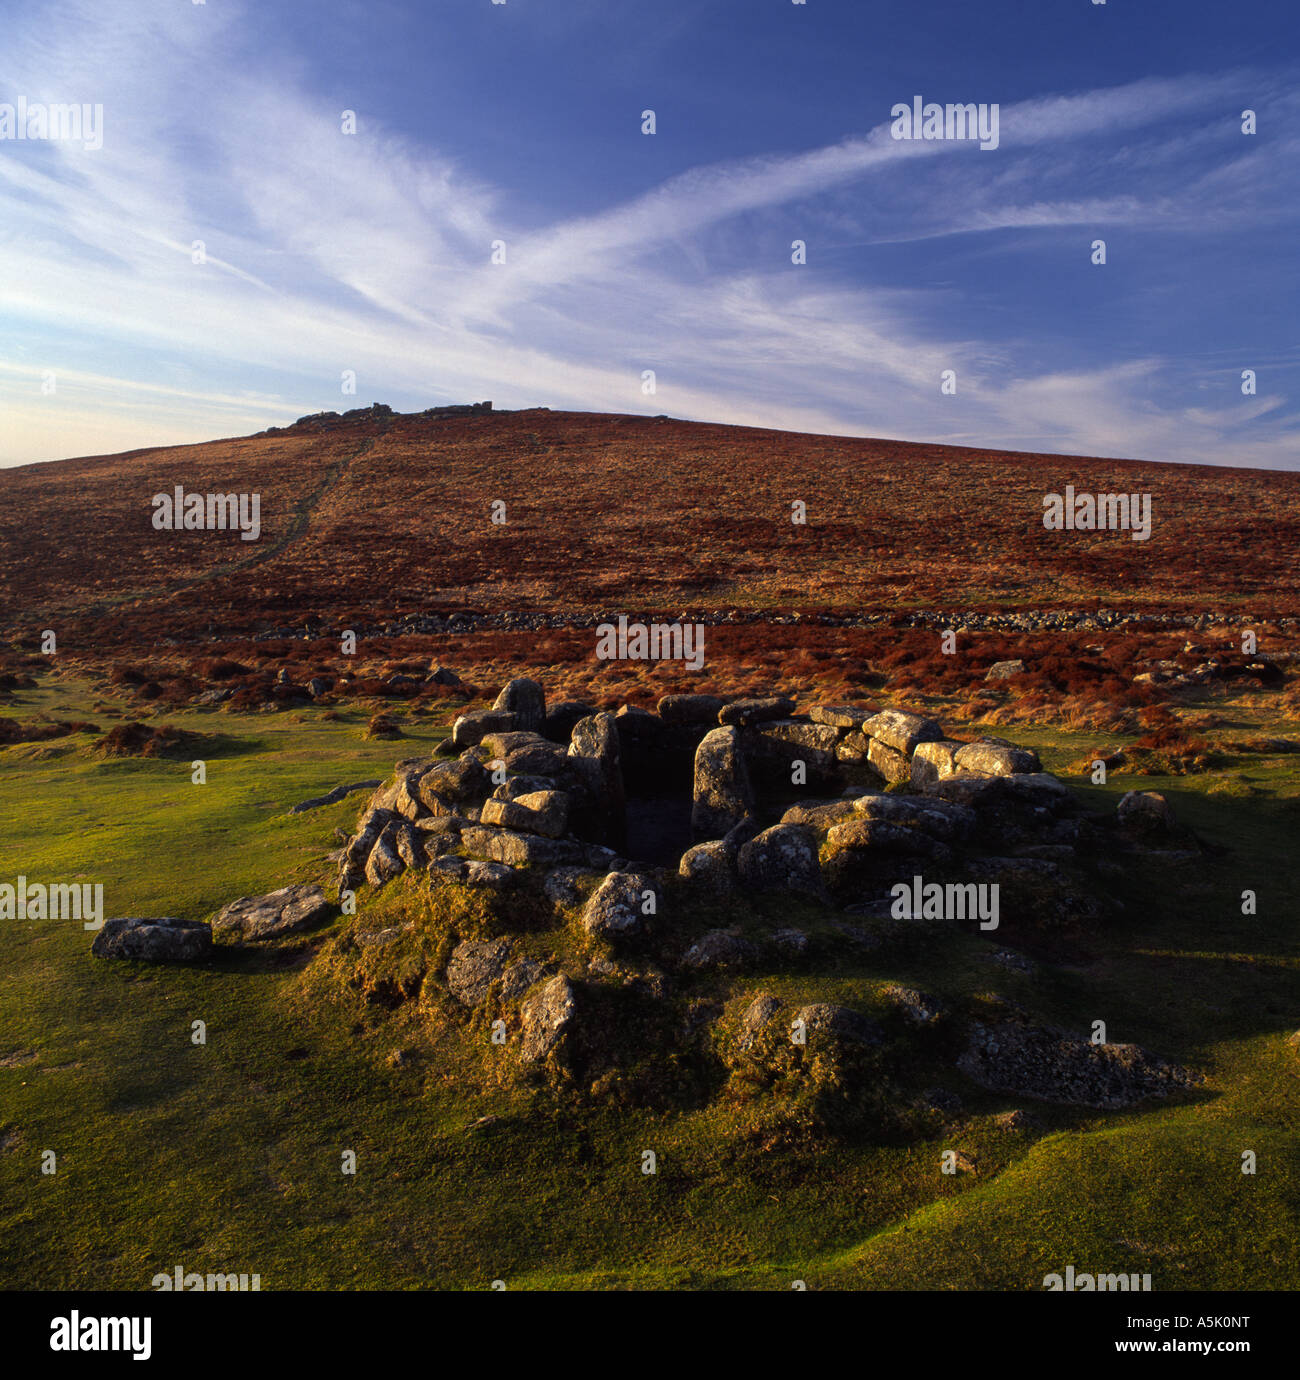 Grimspound bronze-age hut settlement at sunset, Dartmoor, Devon, England, UK, Europe Stock Photo